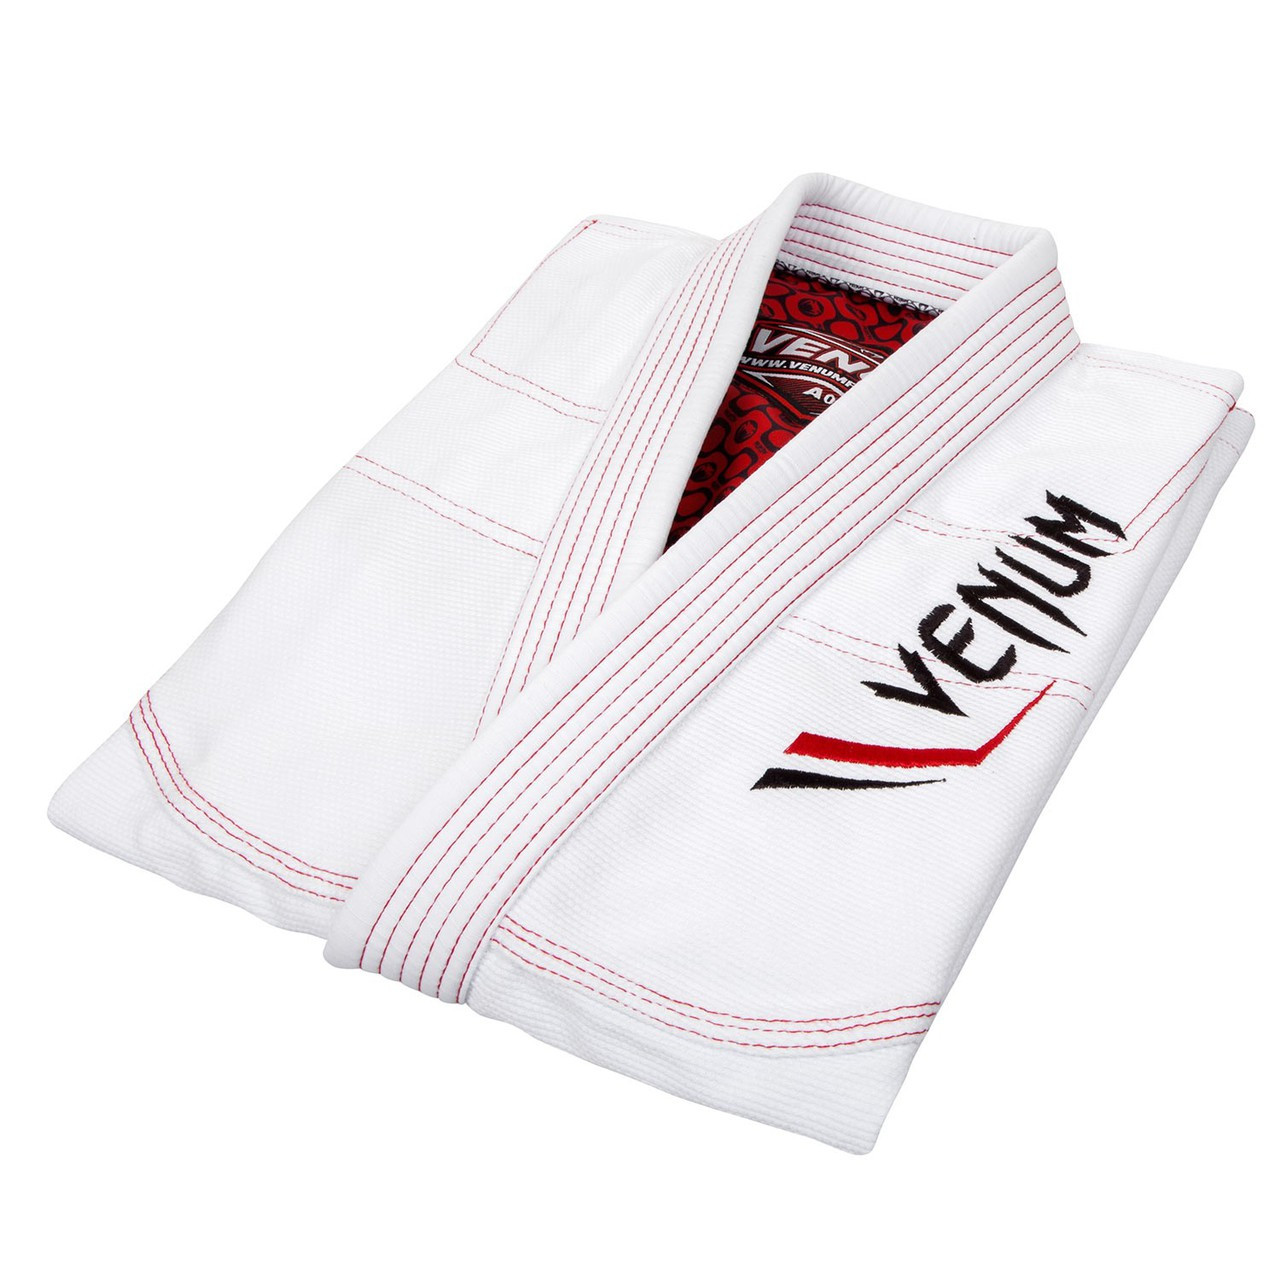 Folded Venum Elite Light BJJ GI in White is now available at www.thejiujitsushop.com

Enjoy Free Shipping from The Jiu Jitsu Shop today! 